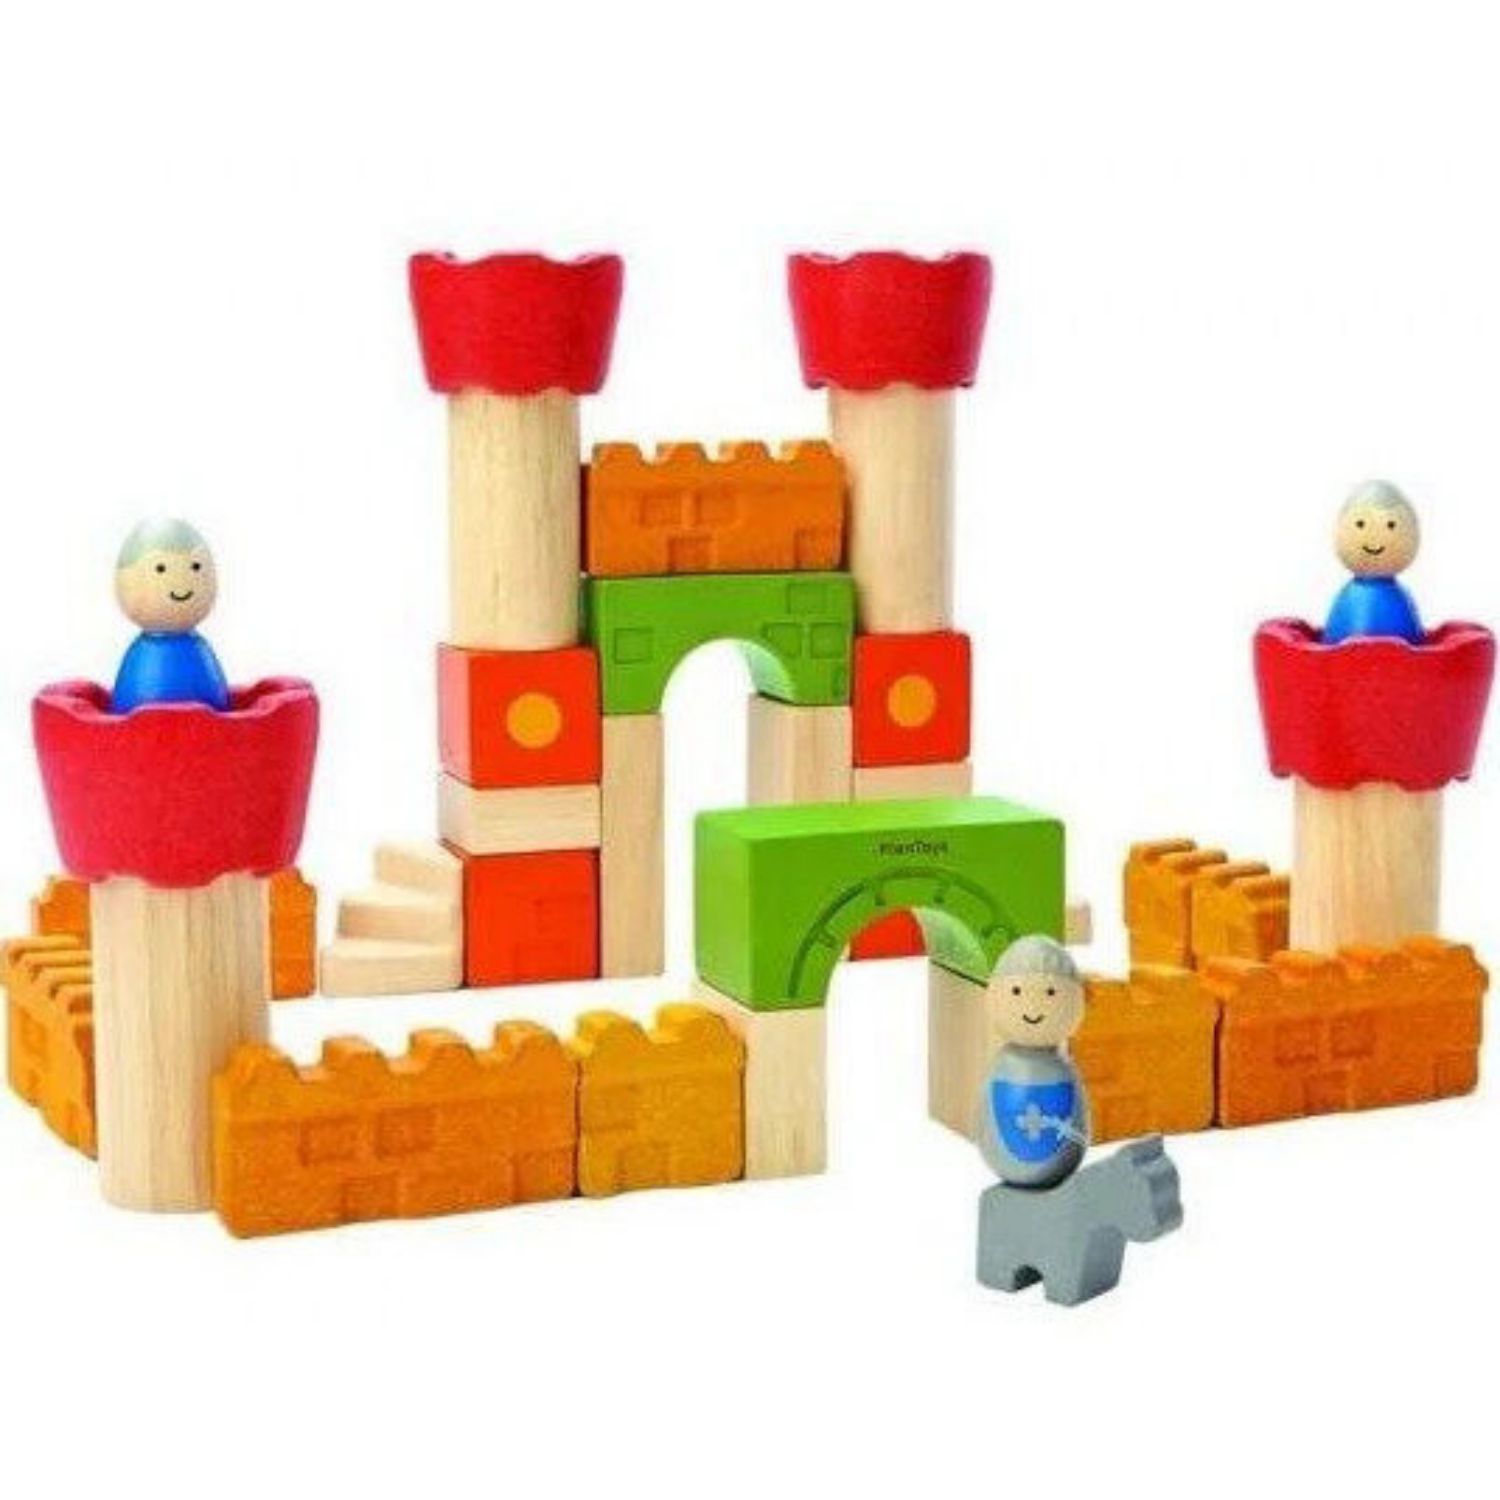 PlanToys Castle Blocks